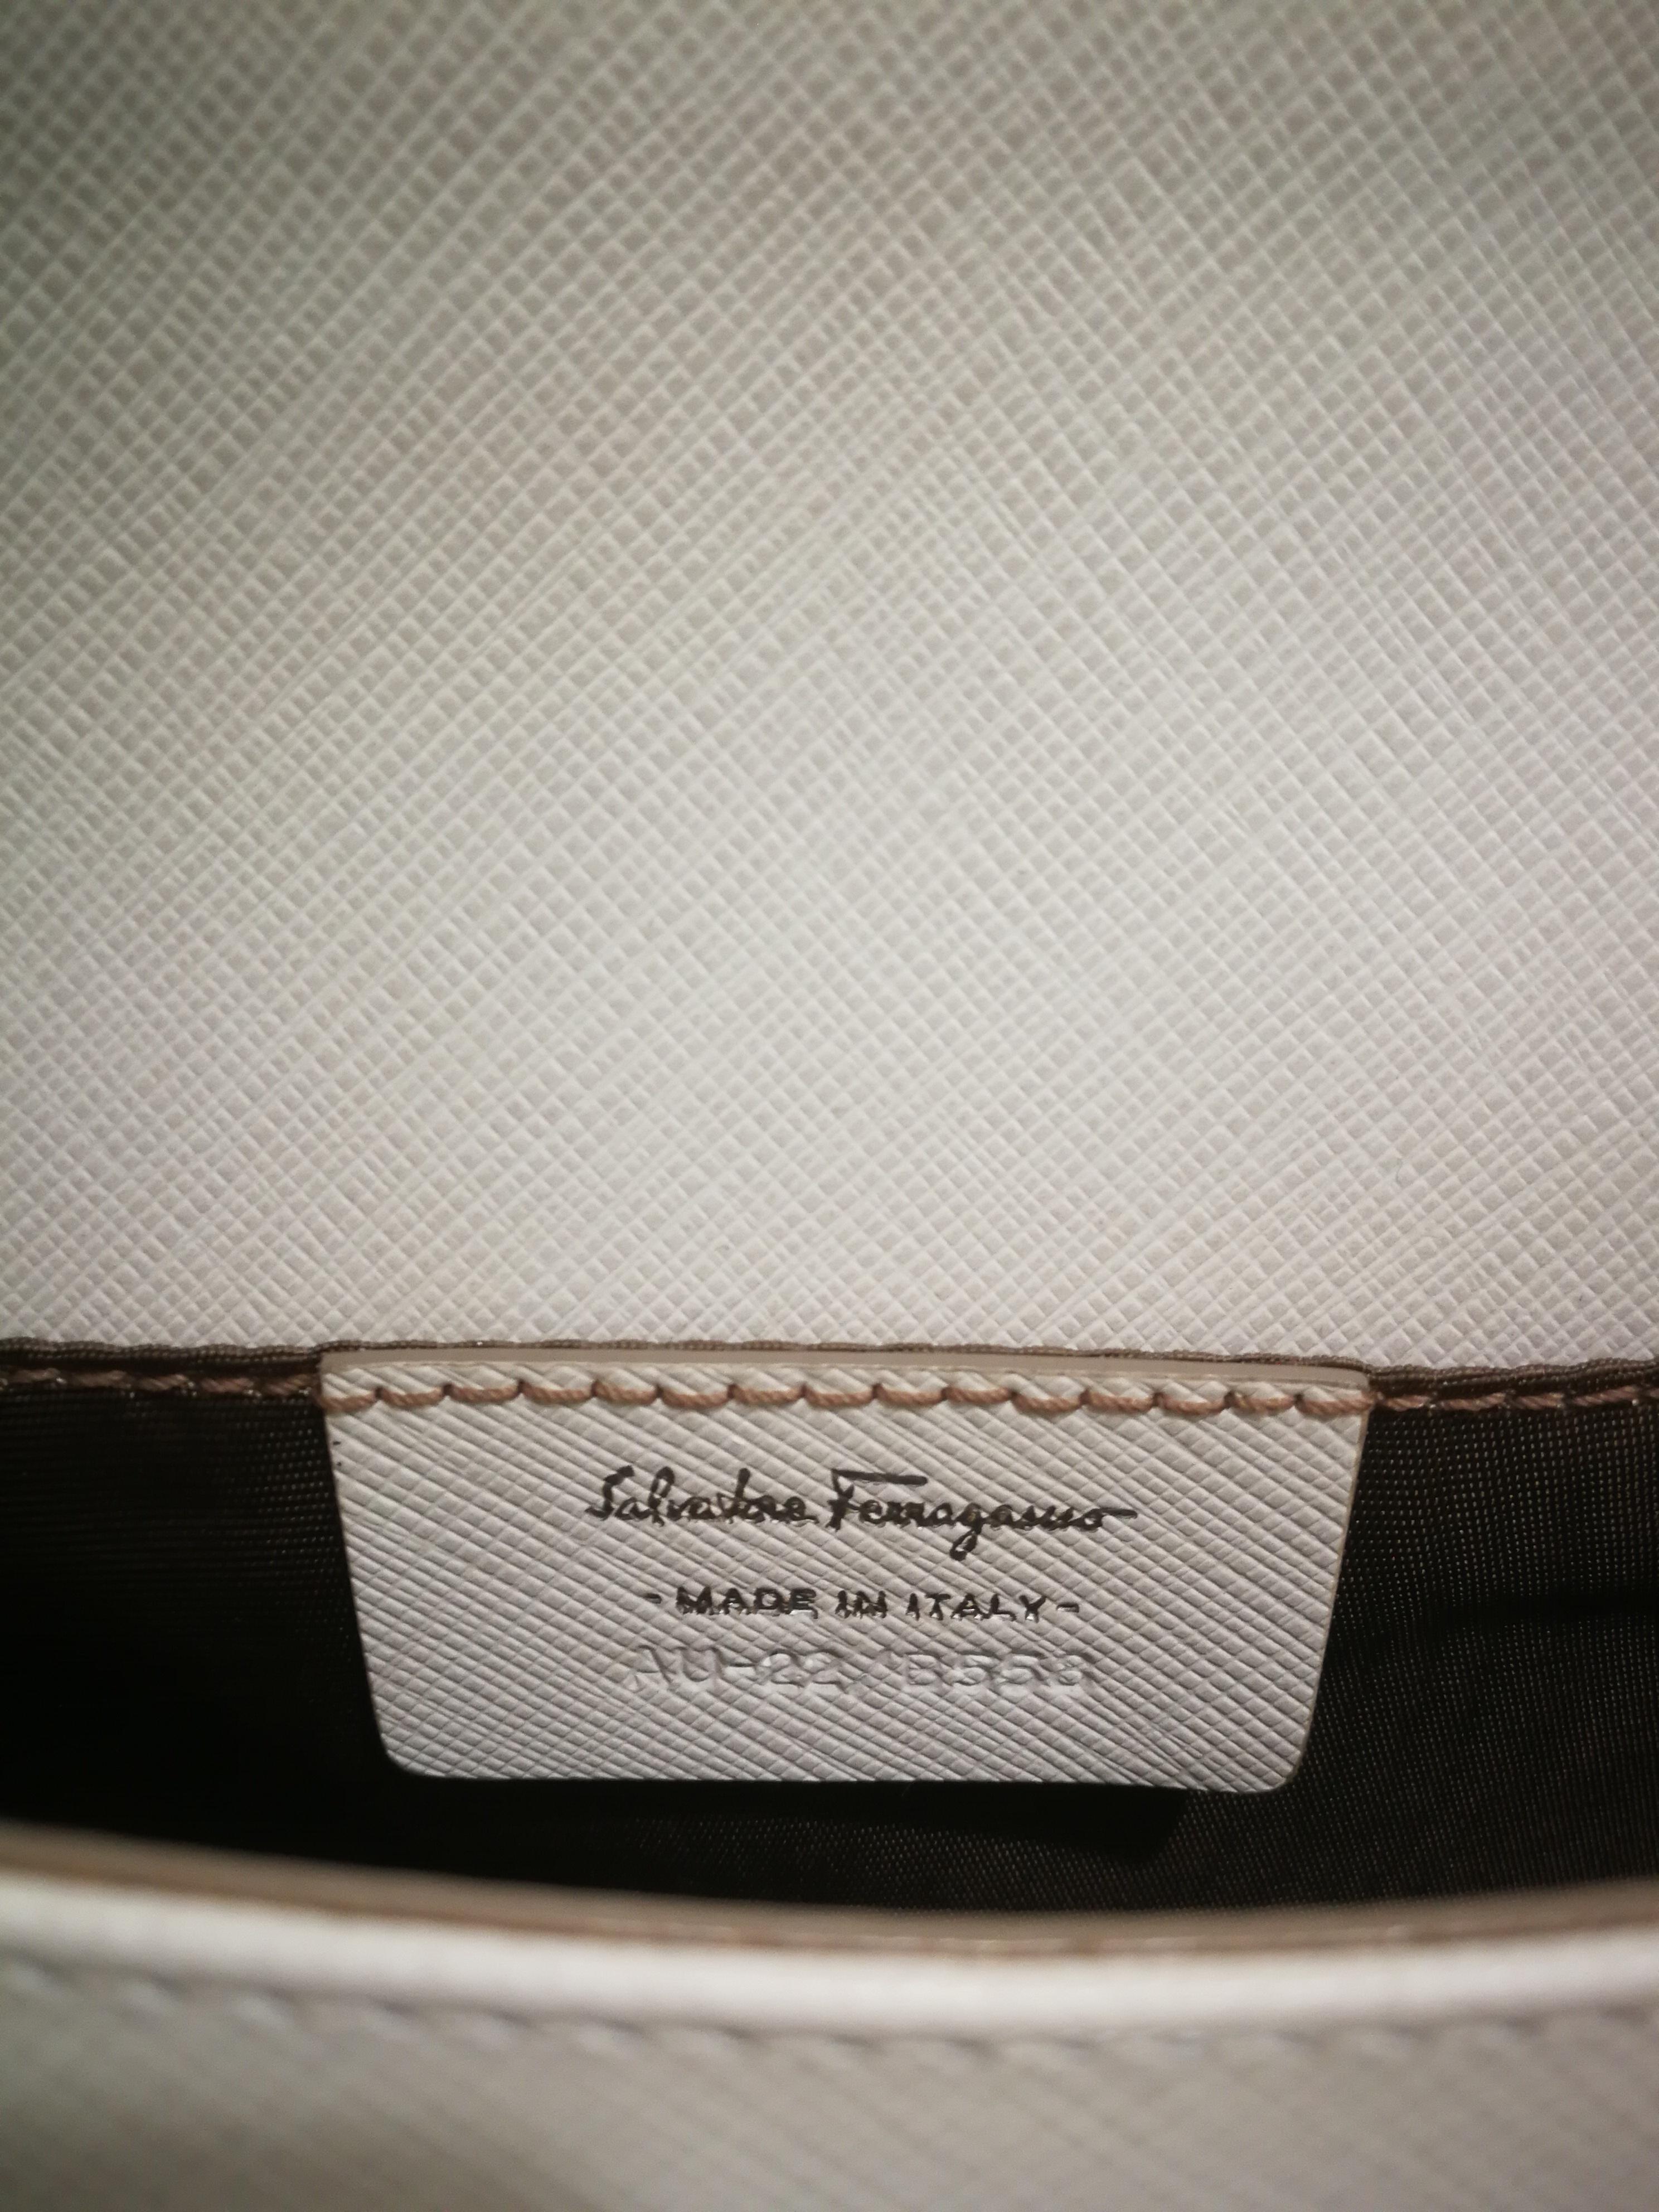 Women's or Men's Salvatore Ferragamo White Leather Shoulder Bag NWOT